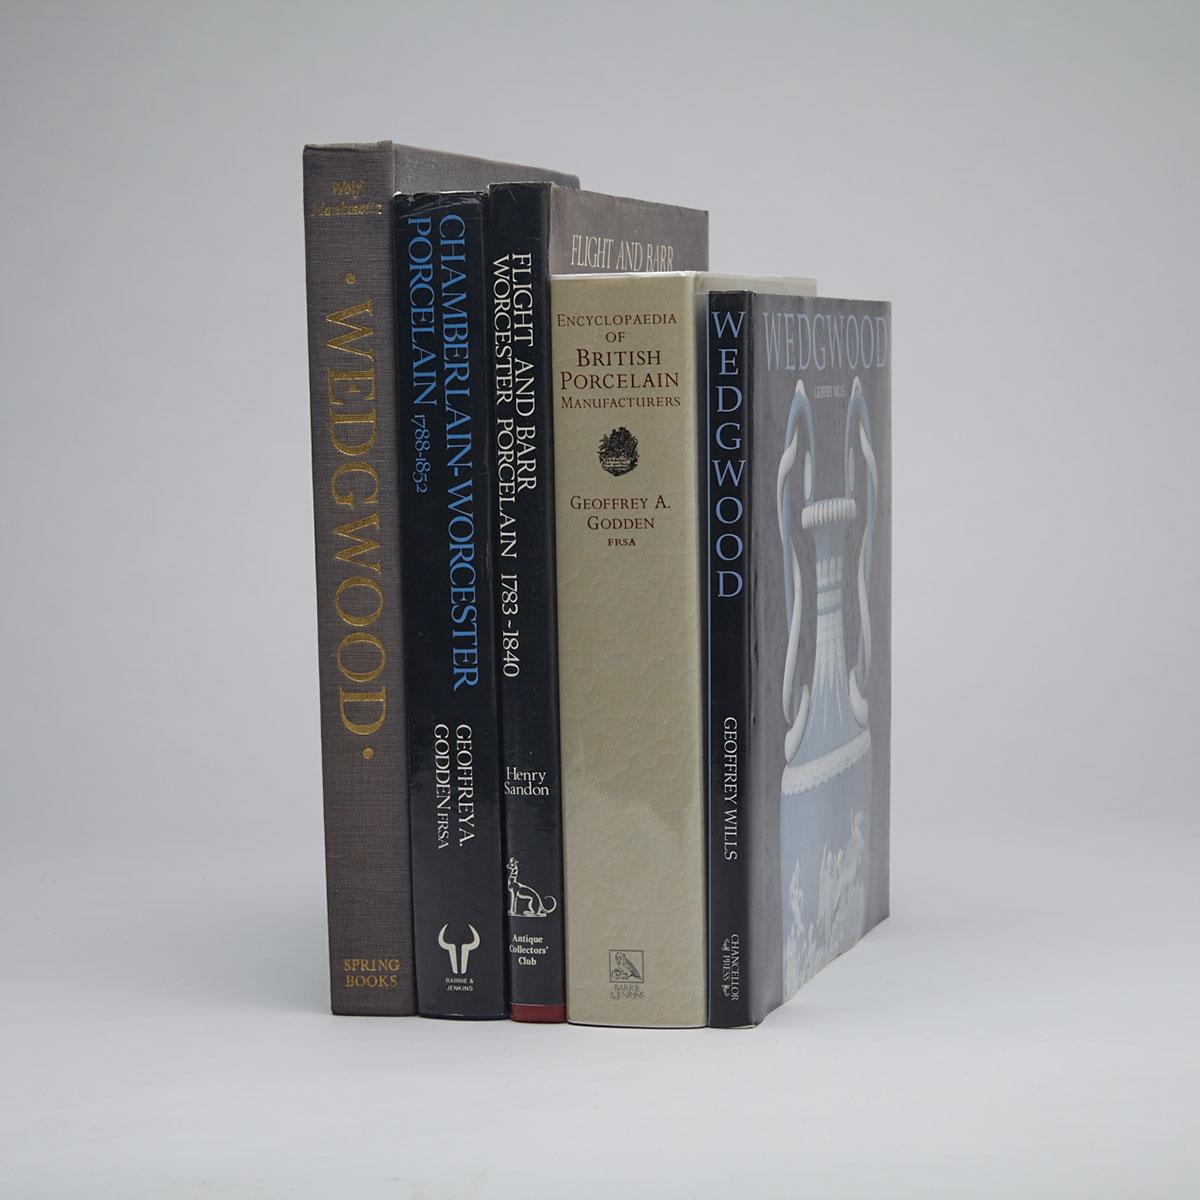 [Reference Books]
Five Volumes on English Ceramics